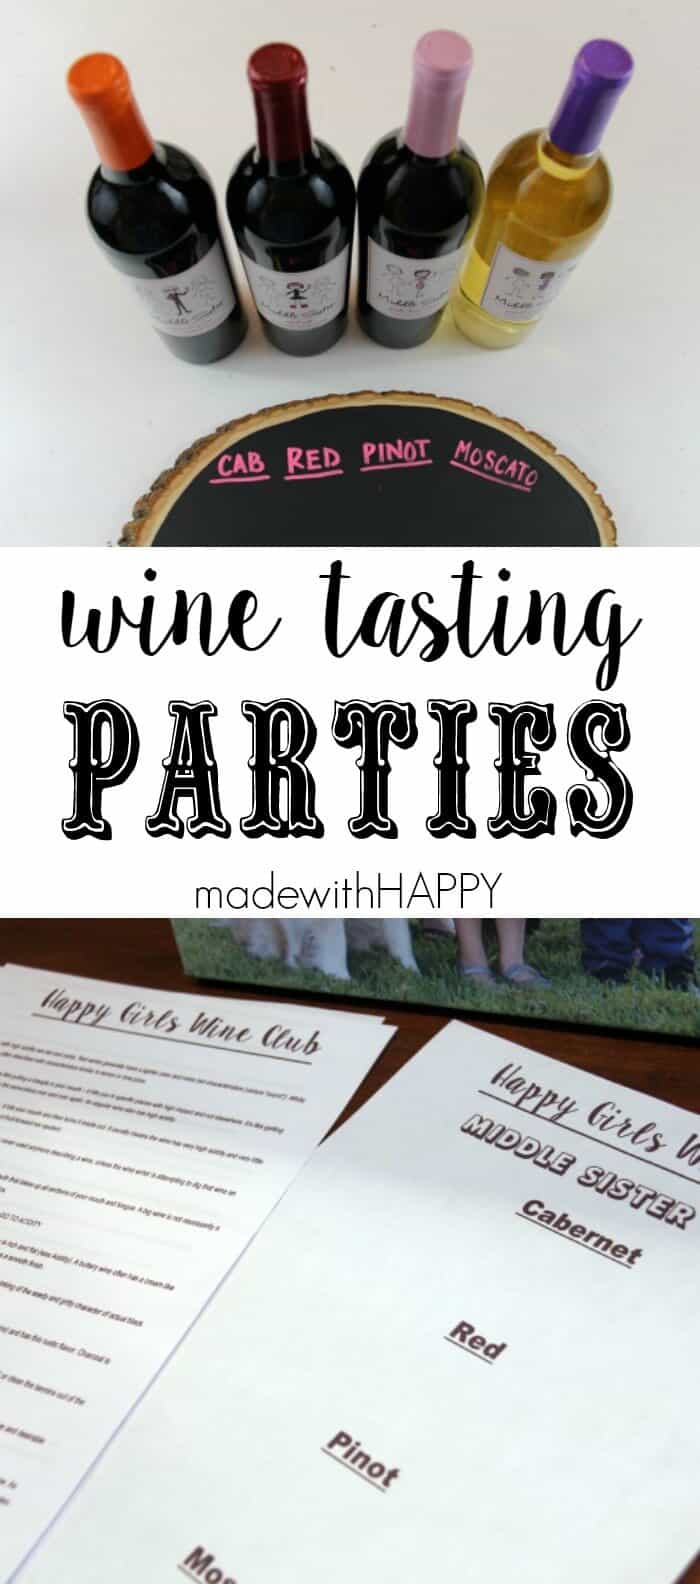 Middle Sister Wine | Happy Girls Wine CLub | Fun Wine Club descriptors and girls night fun. #MiddleSister #DropsofWisdom AD